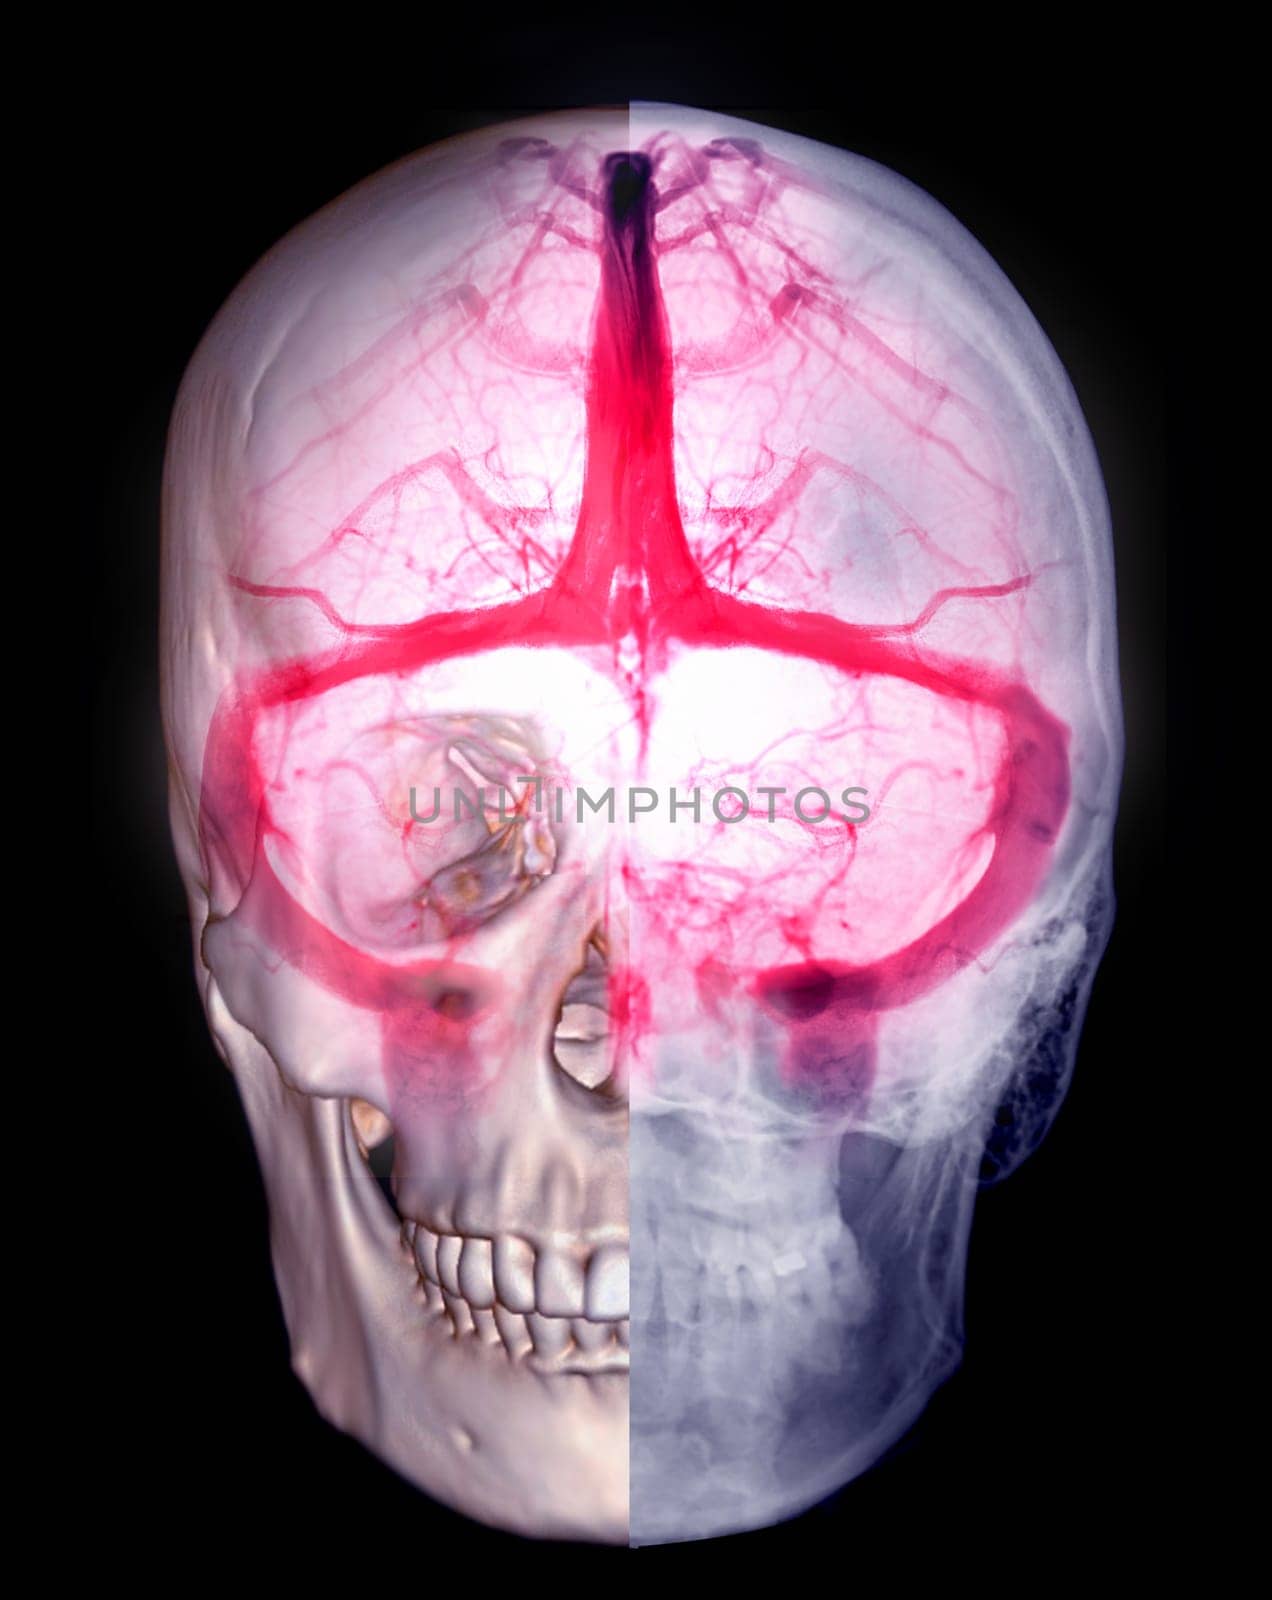 Cerebral  Venograpgy for diagnosisi Cerebral Venous Thrombosis